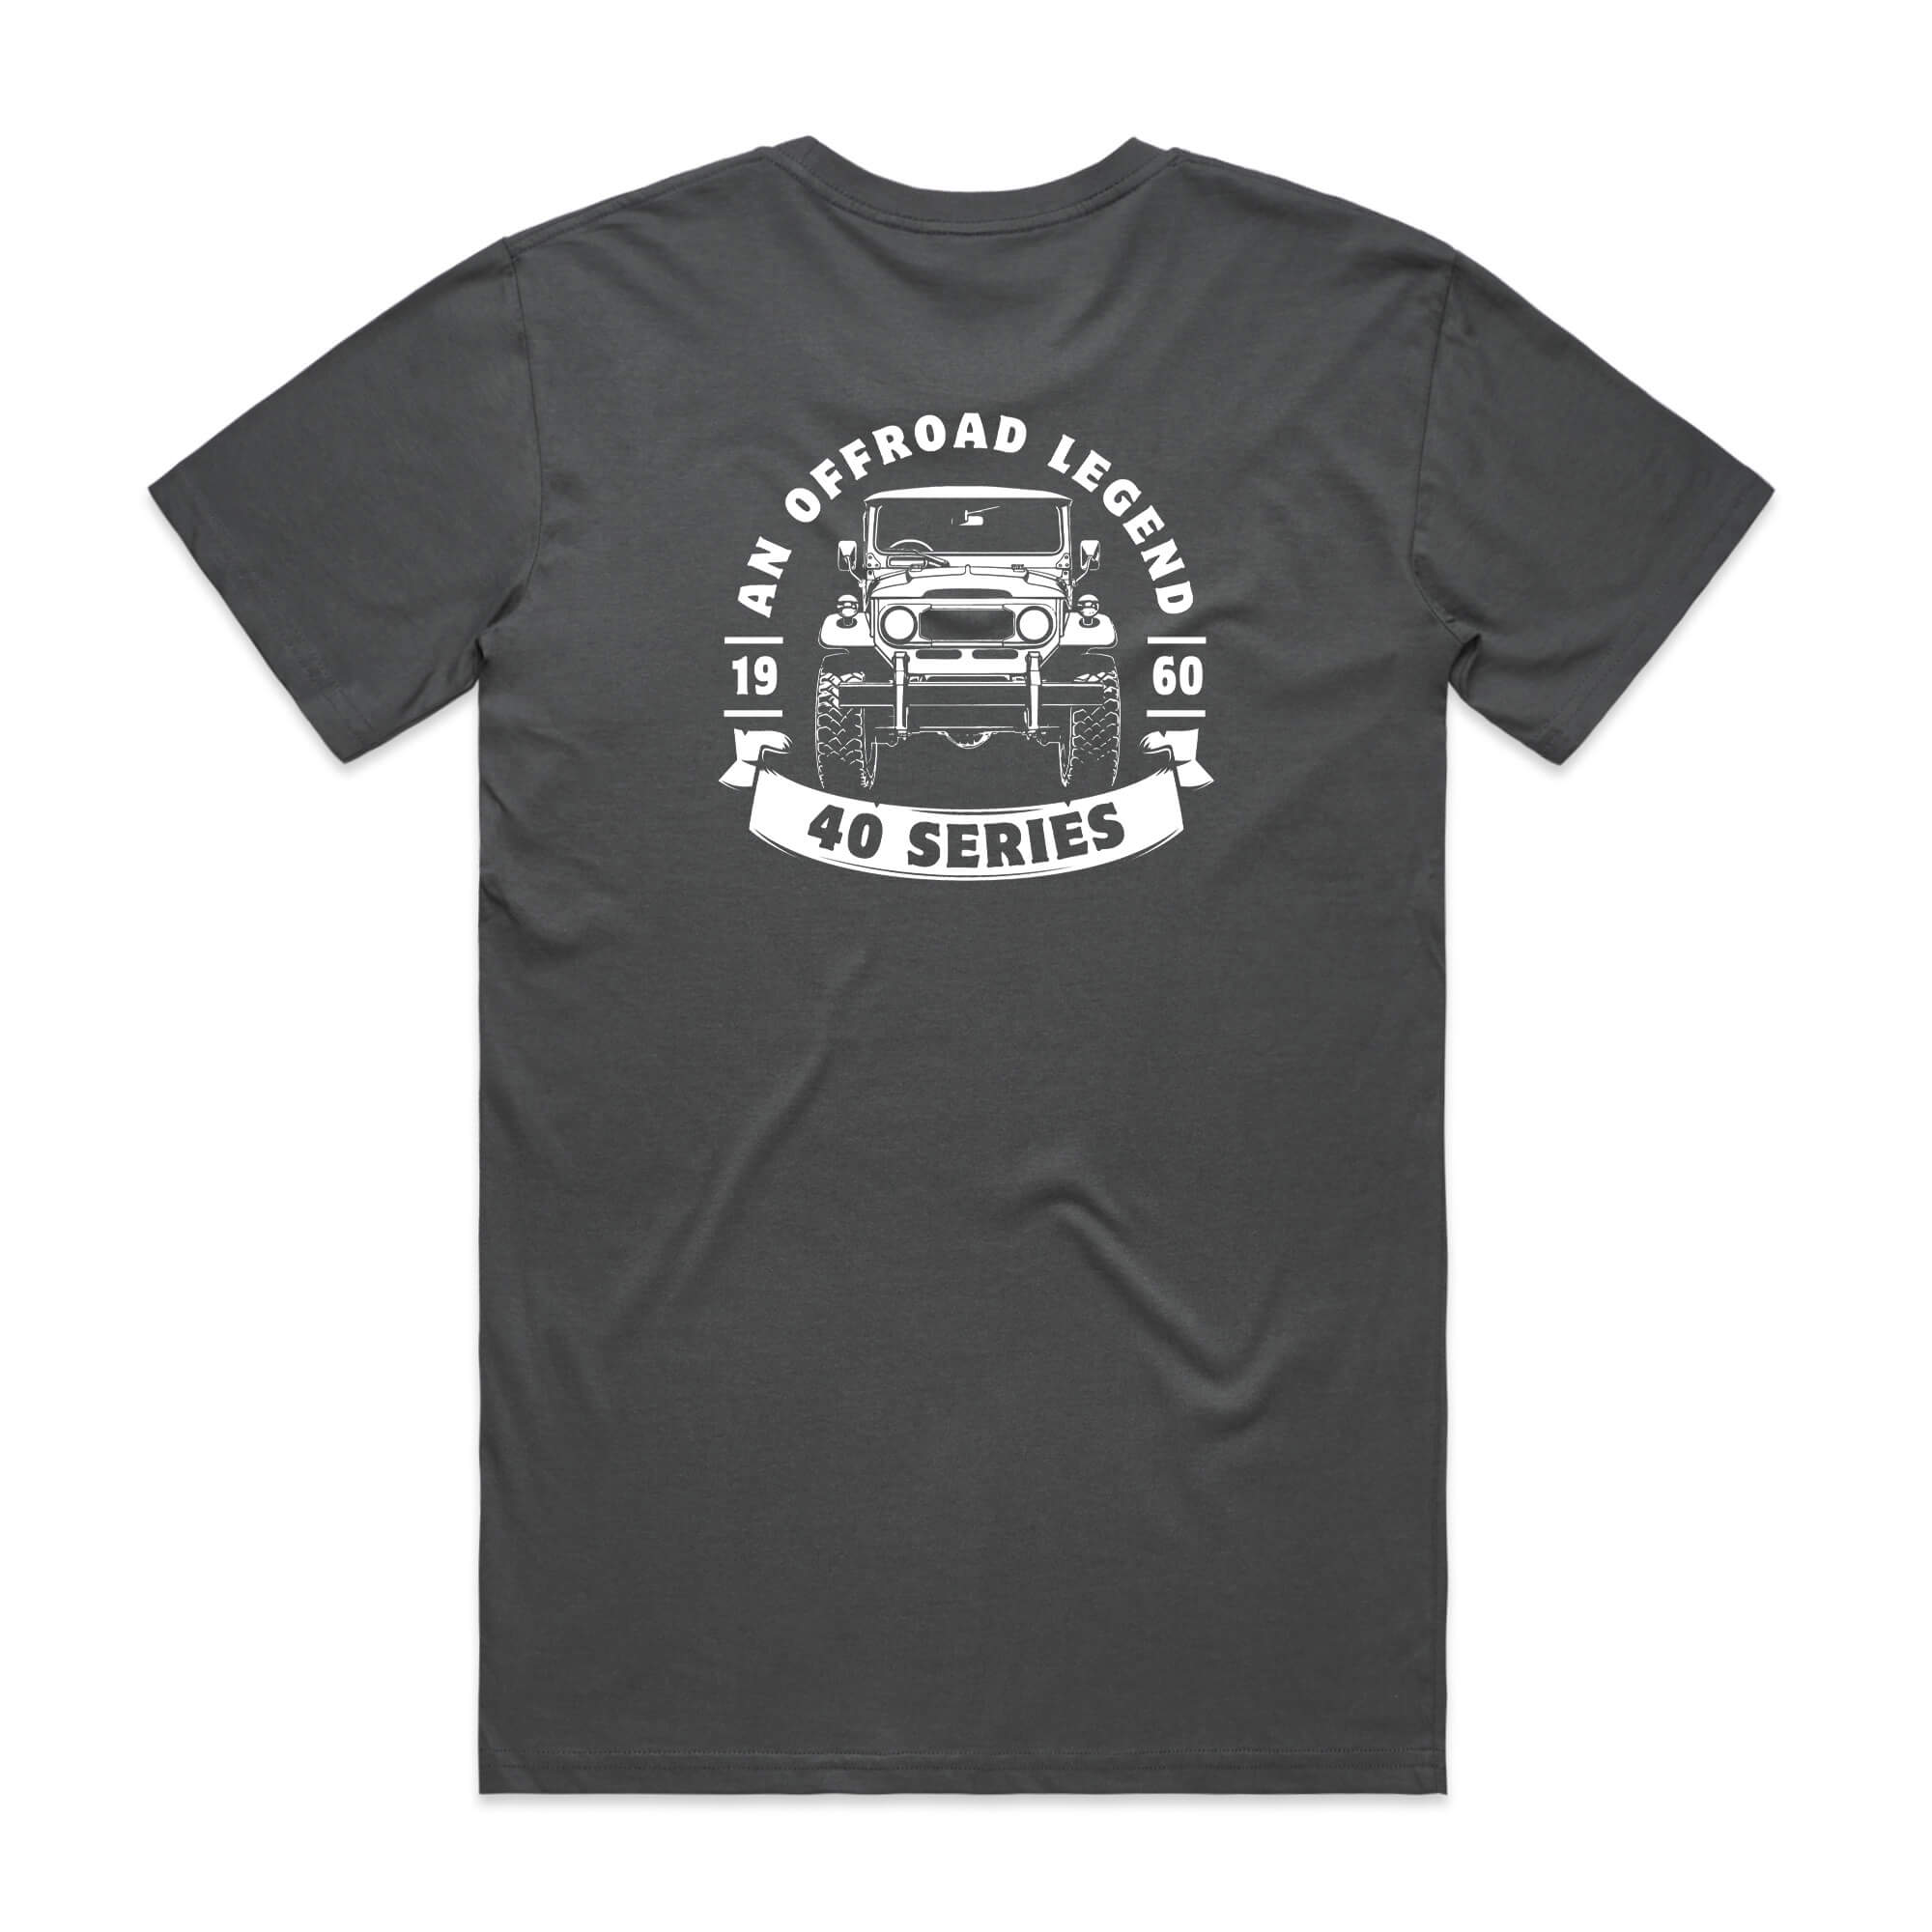 Shamrock Shirts: Premium Automotive T-Shirts for Car Enthusiasts